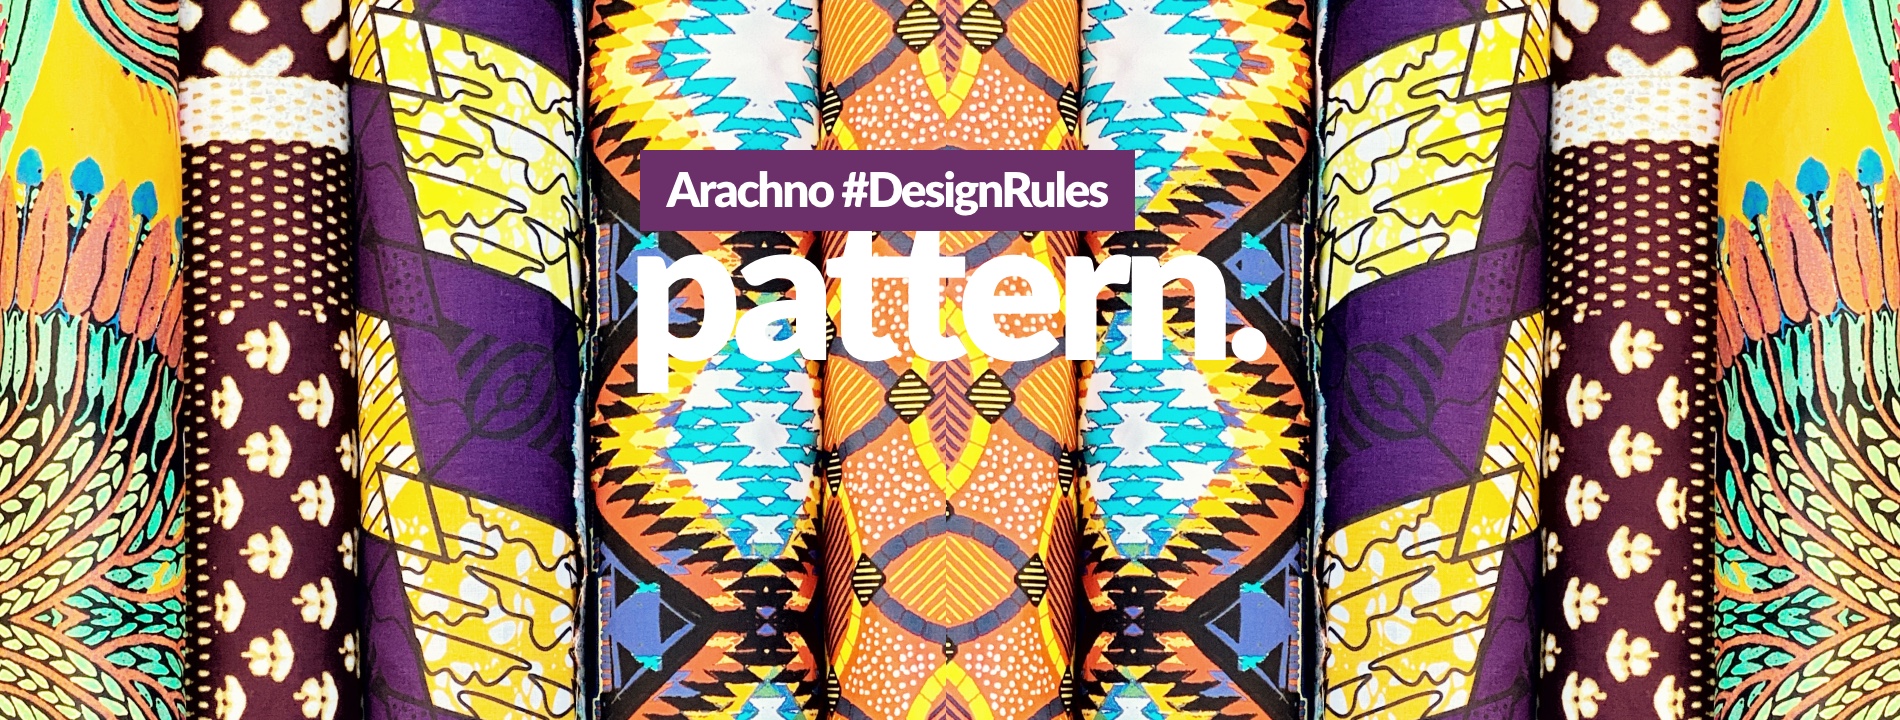 Arachno #DesignRules - pattern